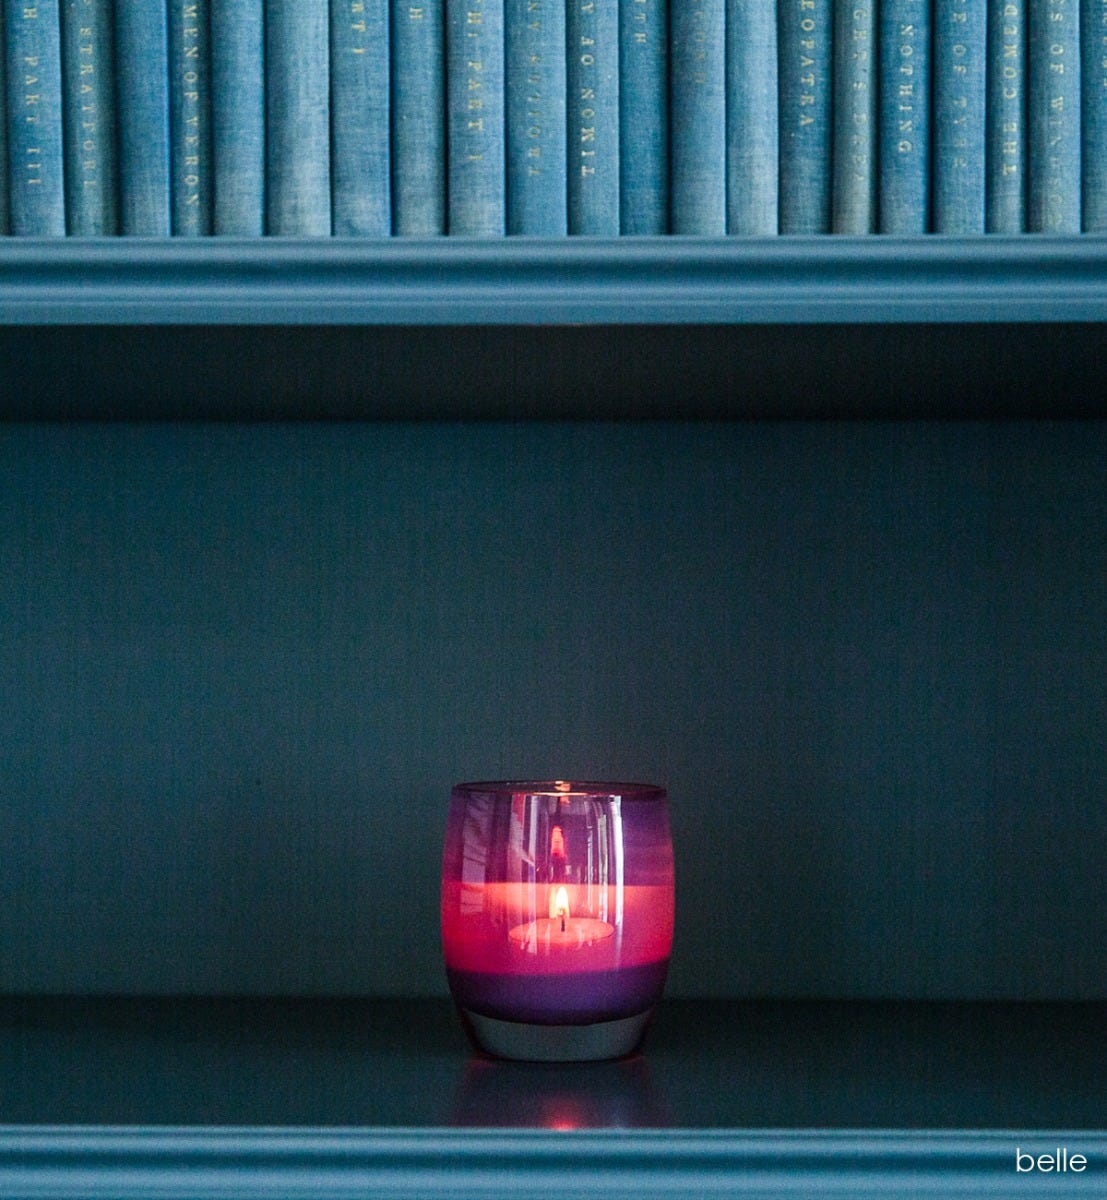 belle regal purple hand-blown glass votive candle holder, on a blue bookshelf.